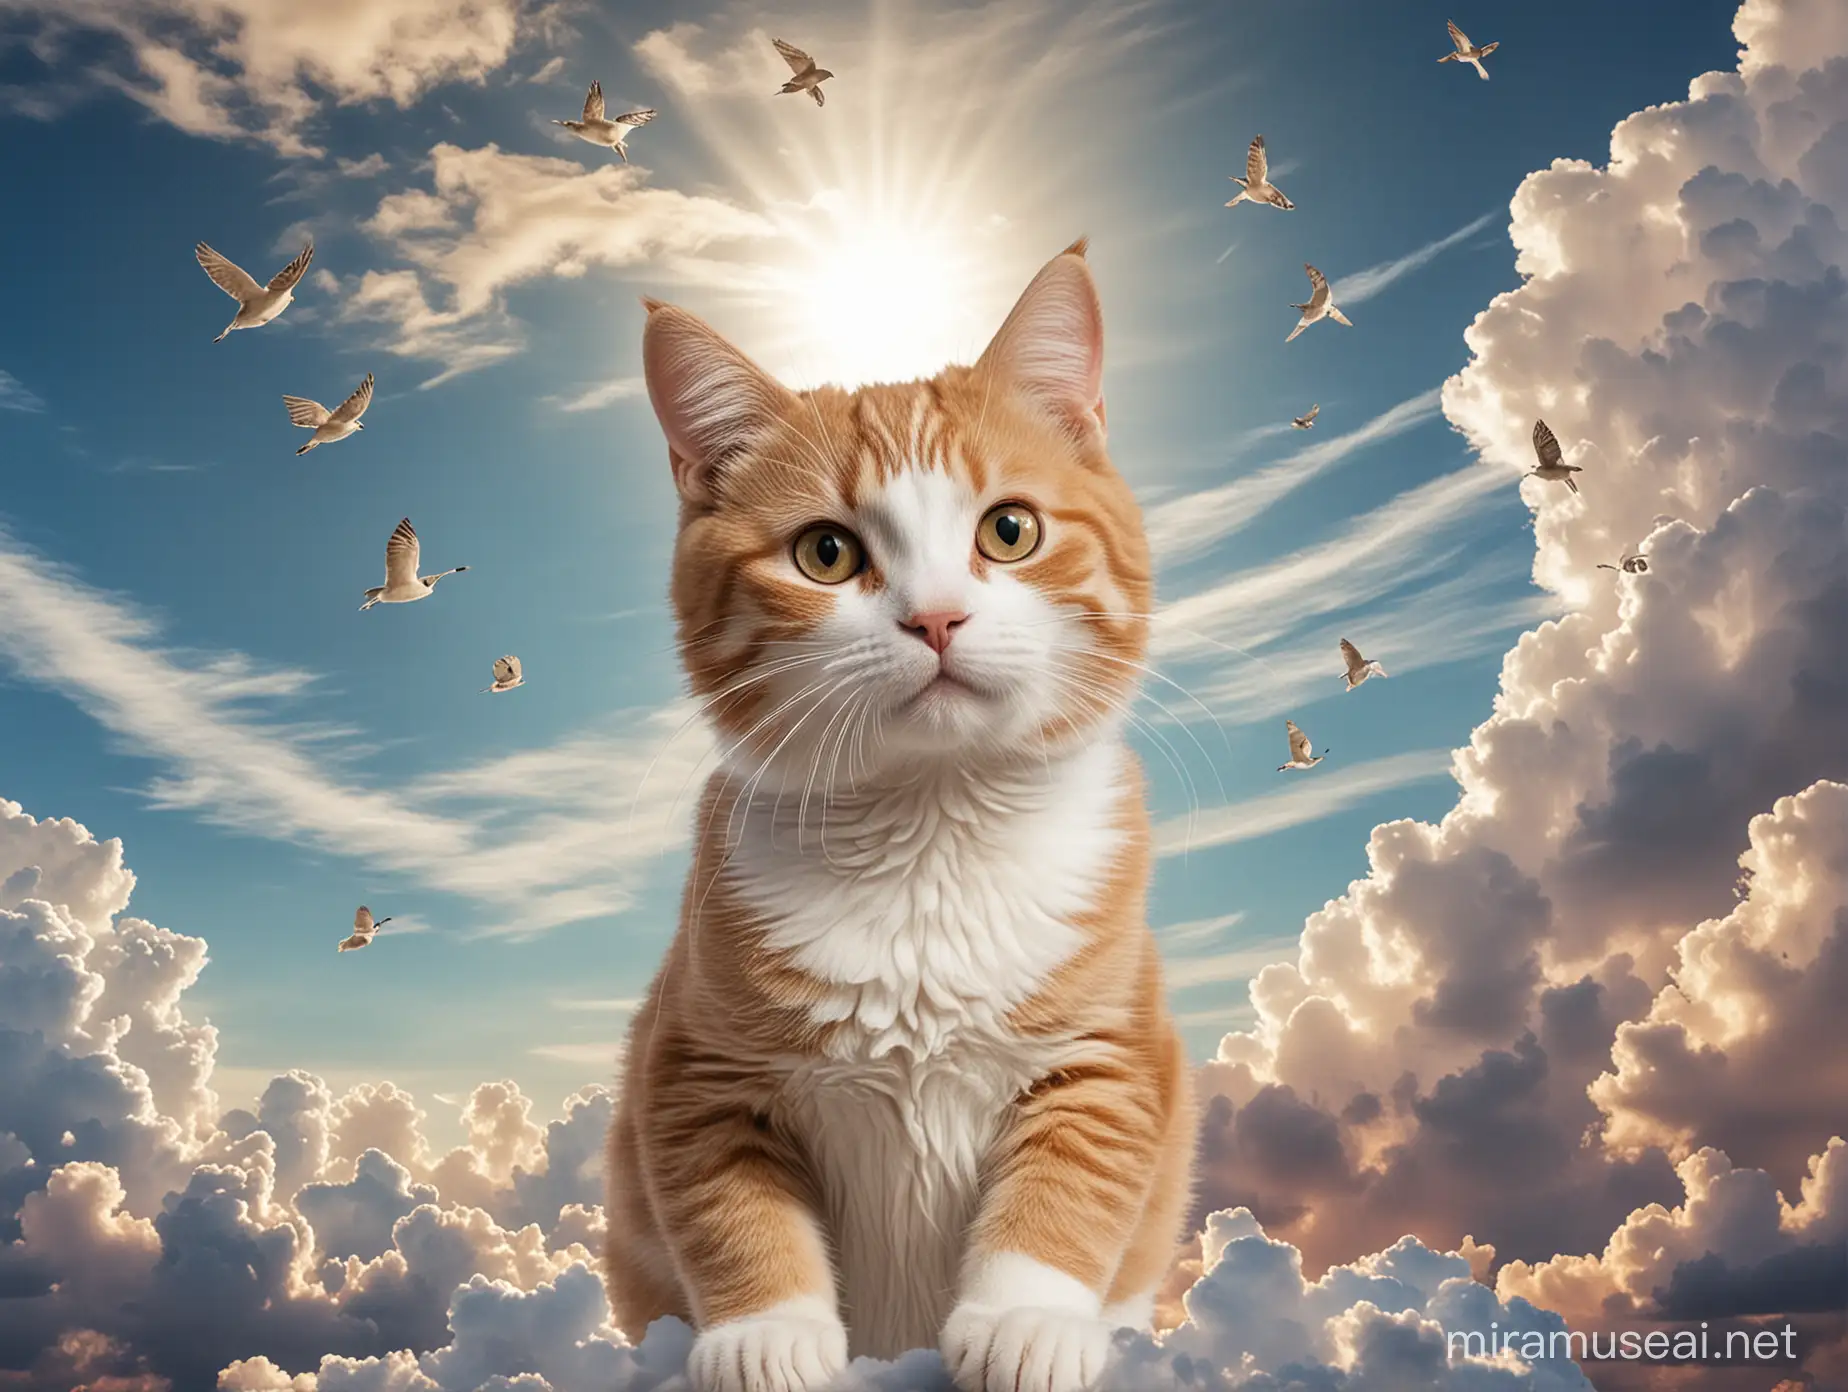 Cat Soaring Through a Peaceful Sky in the New Era